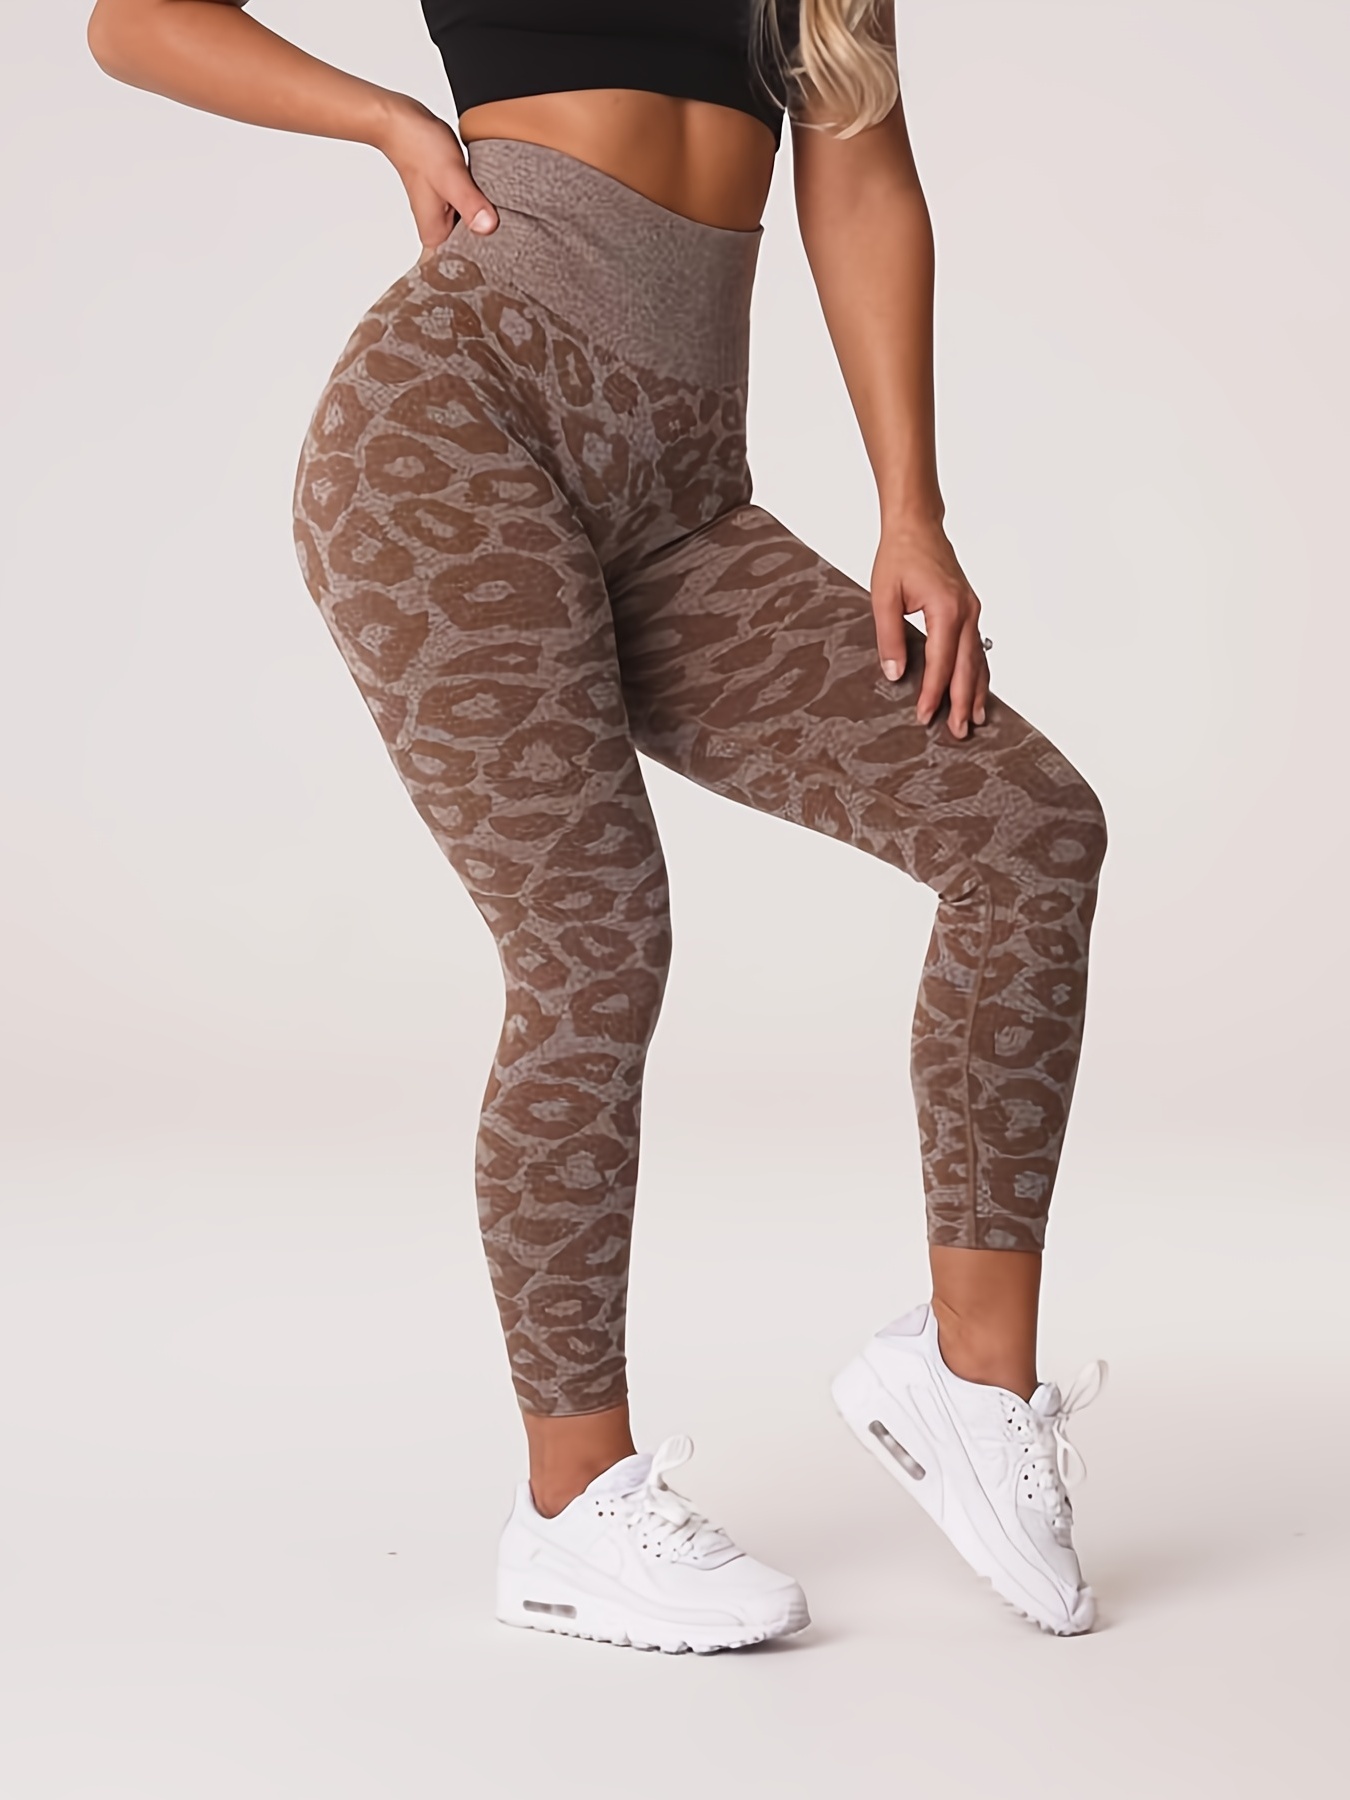 Leopard Print Running Workout Leggings, High Elastic Slim Fitness Yoga  Pants, Women's Activewear